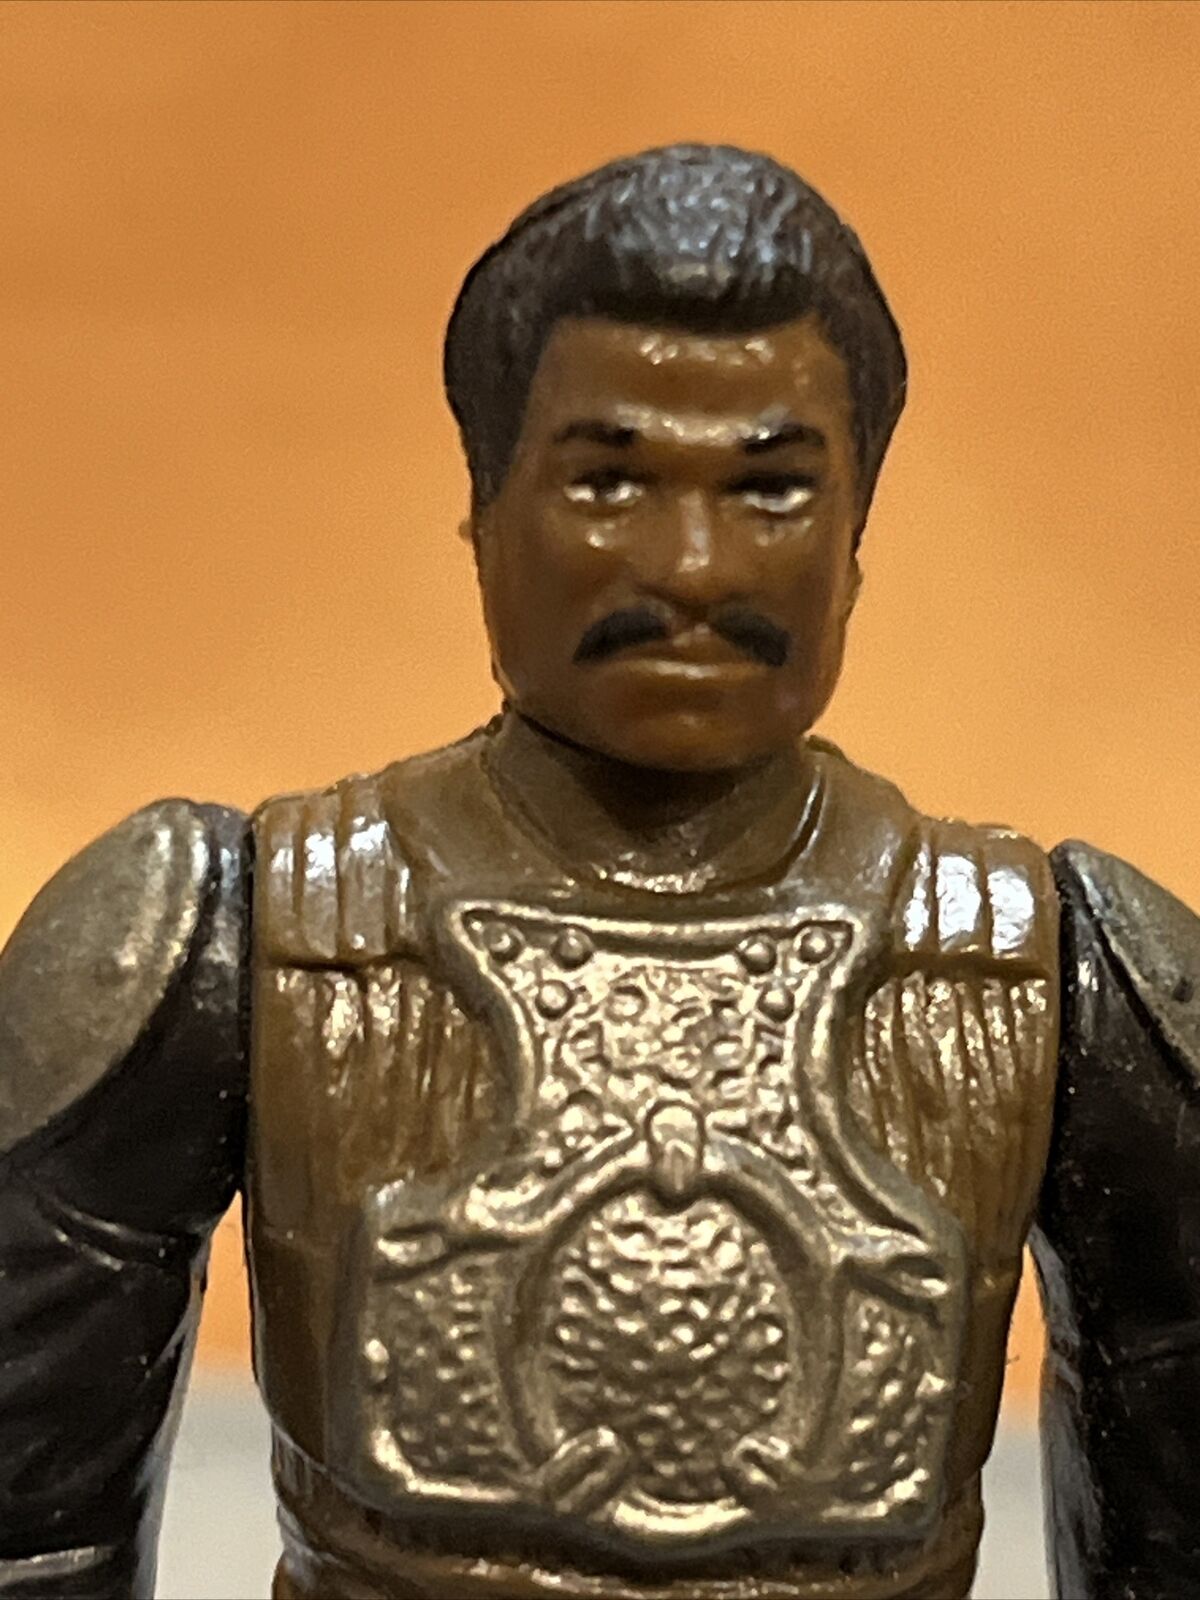 Lando Calrissian (Skiff Guard Disguise) sold